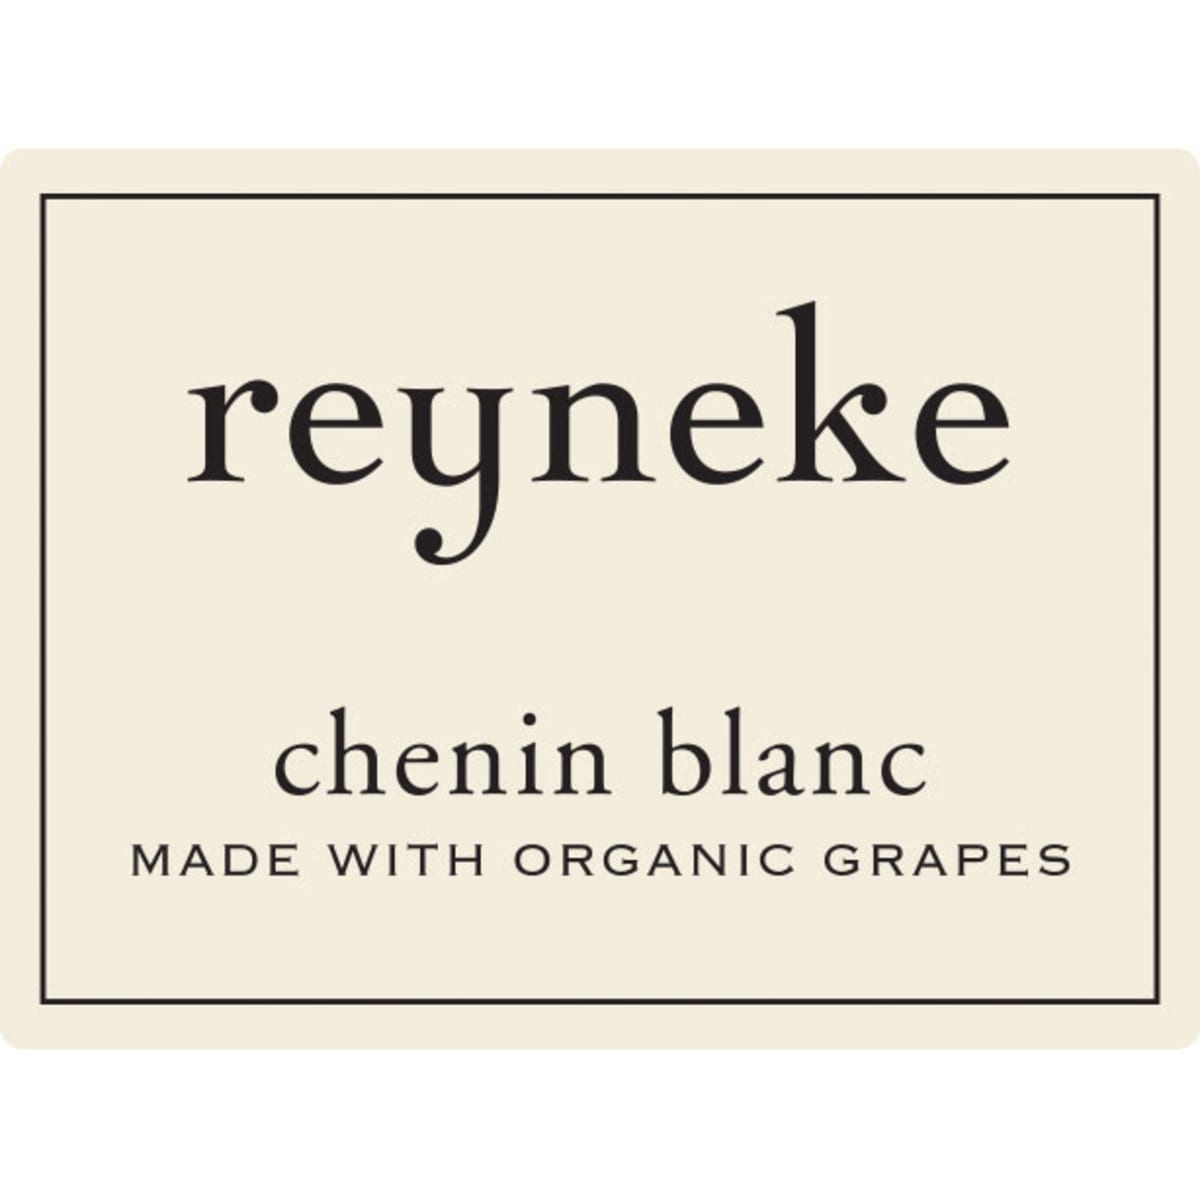 Reyneke Chenin Blanc 2015 Front Label